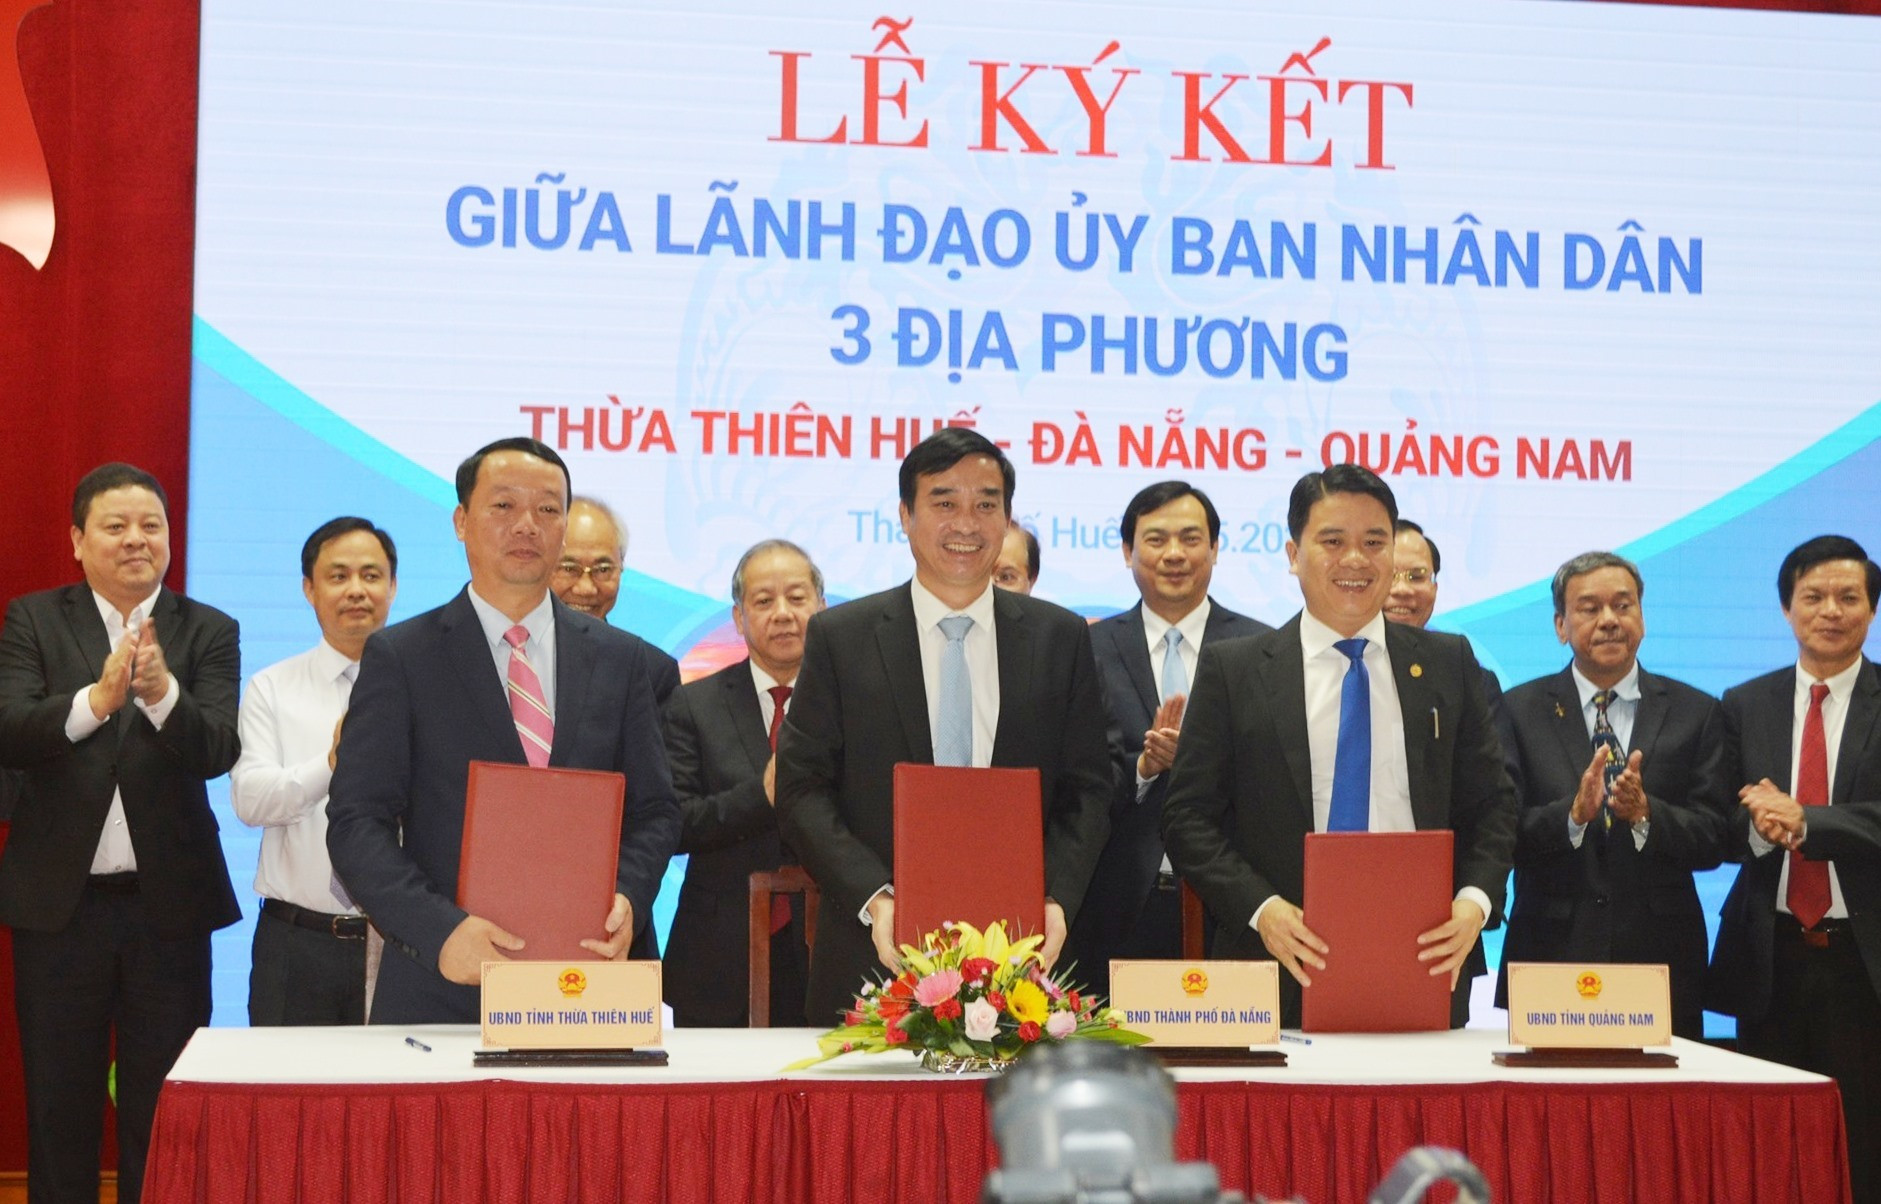 Signing ceremony between leaders of Quang Nam, Da Nang and Thua Thien Hue